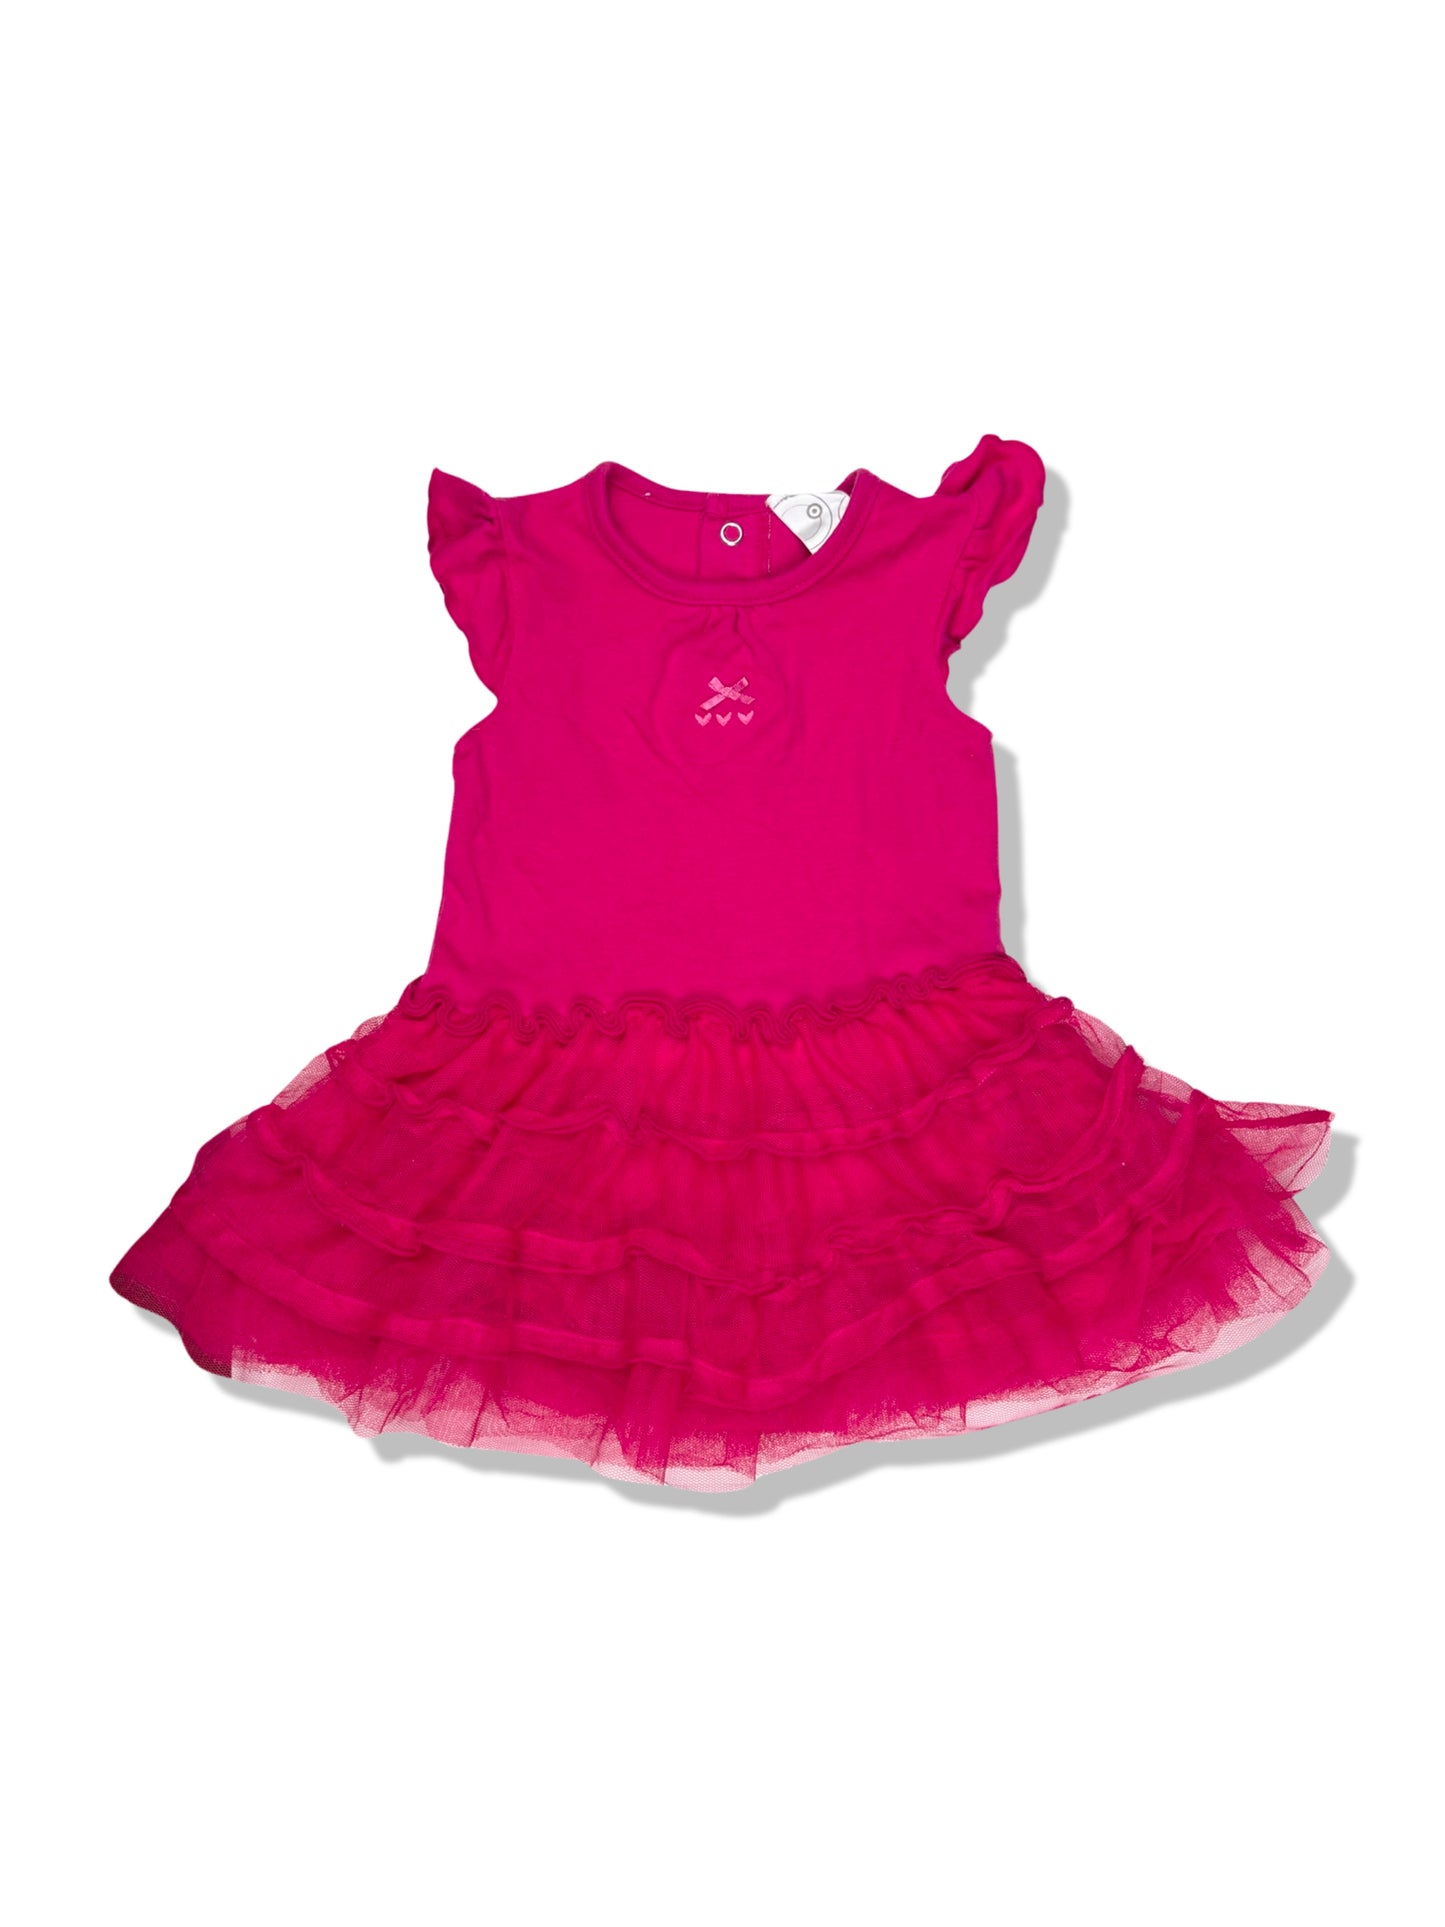 Target Hot Pink Tutu Romper Dress - Size 00